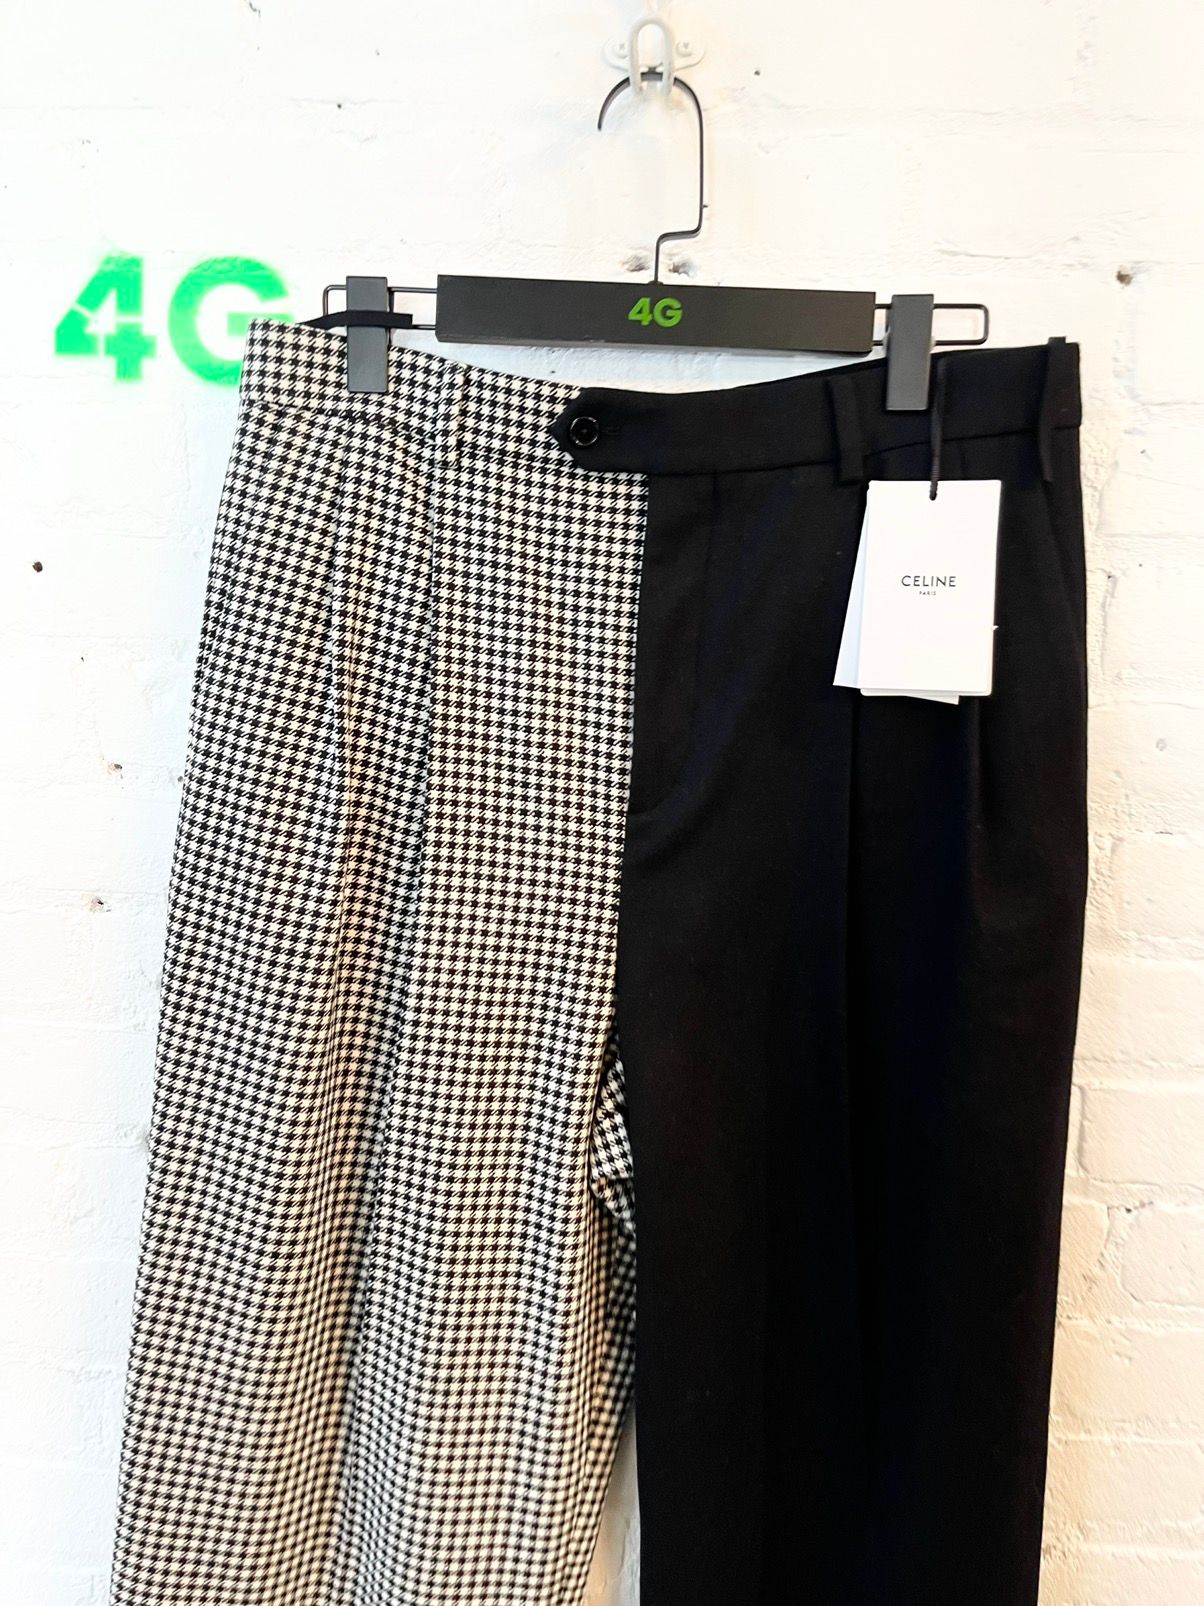 Celine NEW 2 Tone Skater Checkered Gemini Pants Jeans EU 50